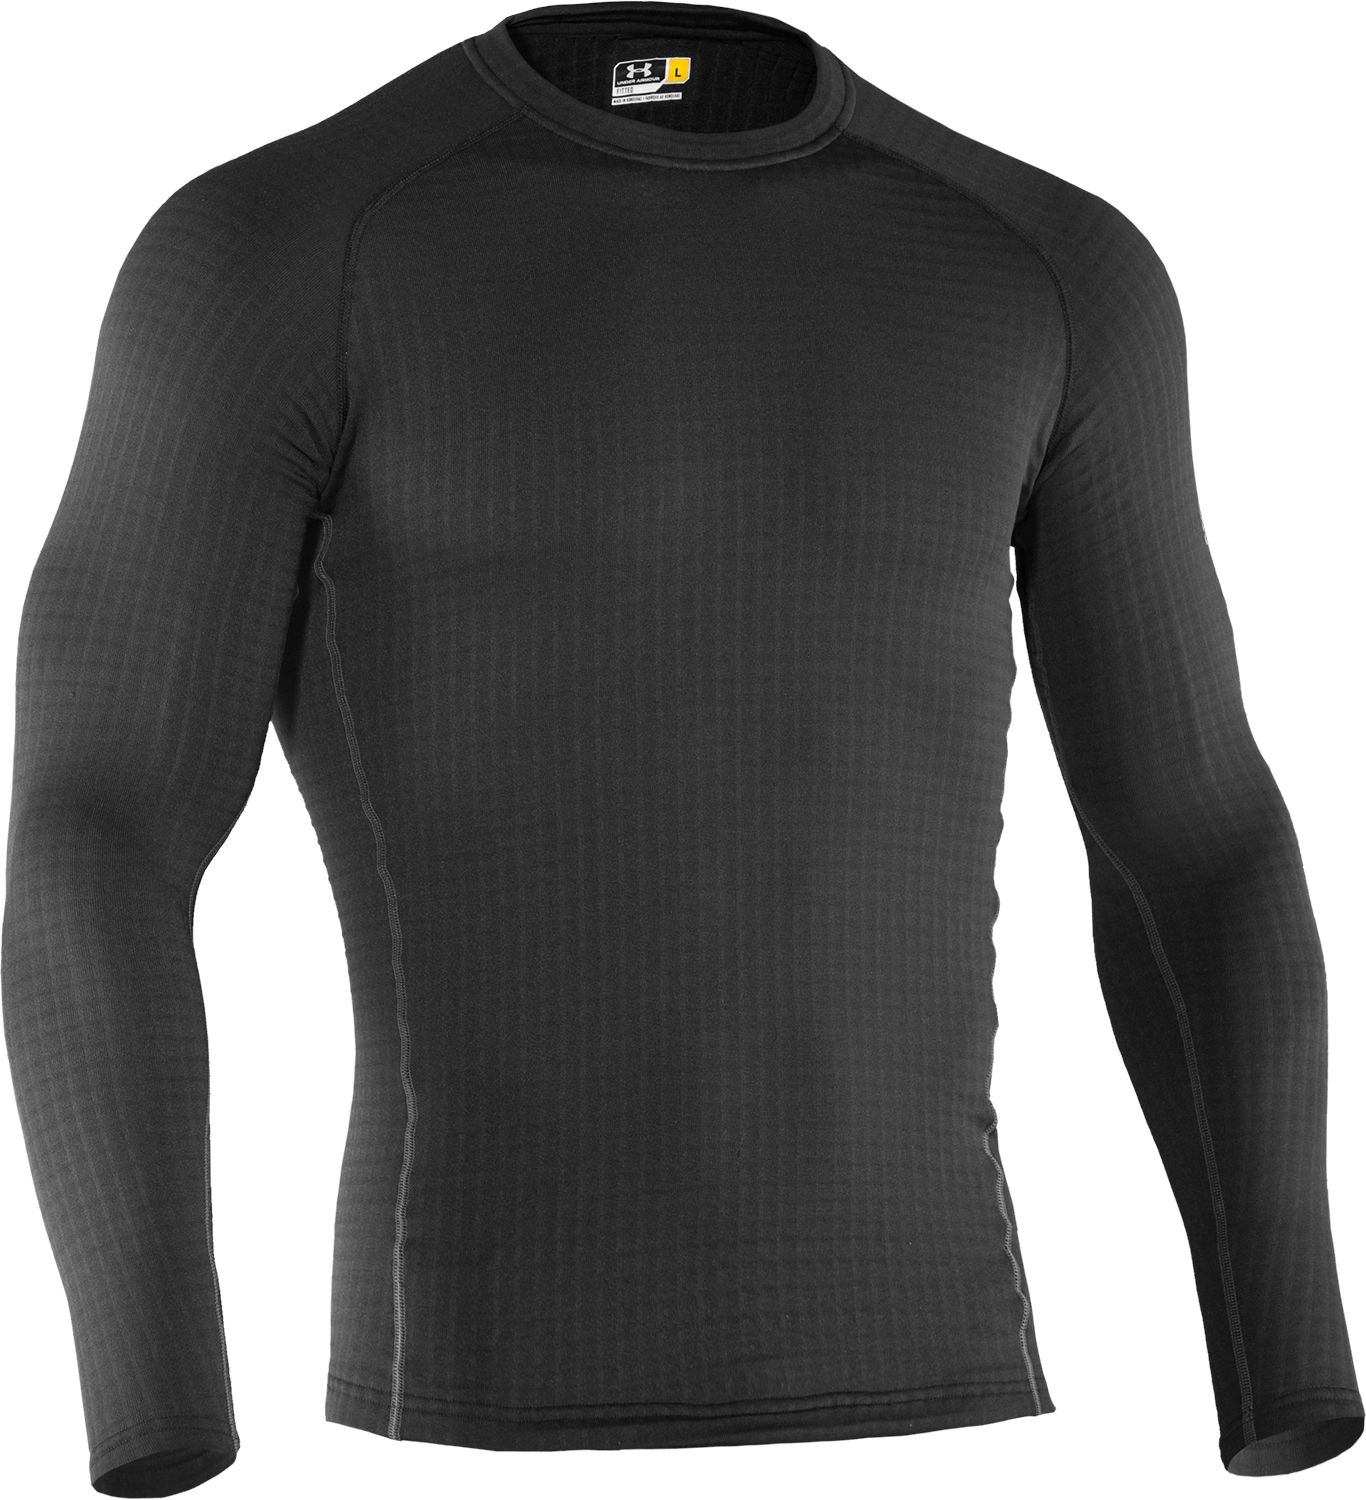 Under Armour Men's UA Base 4.0 Baselayer Shirt | DICK'S Sporting Goods